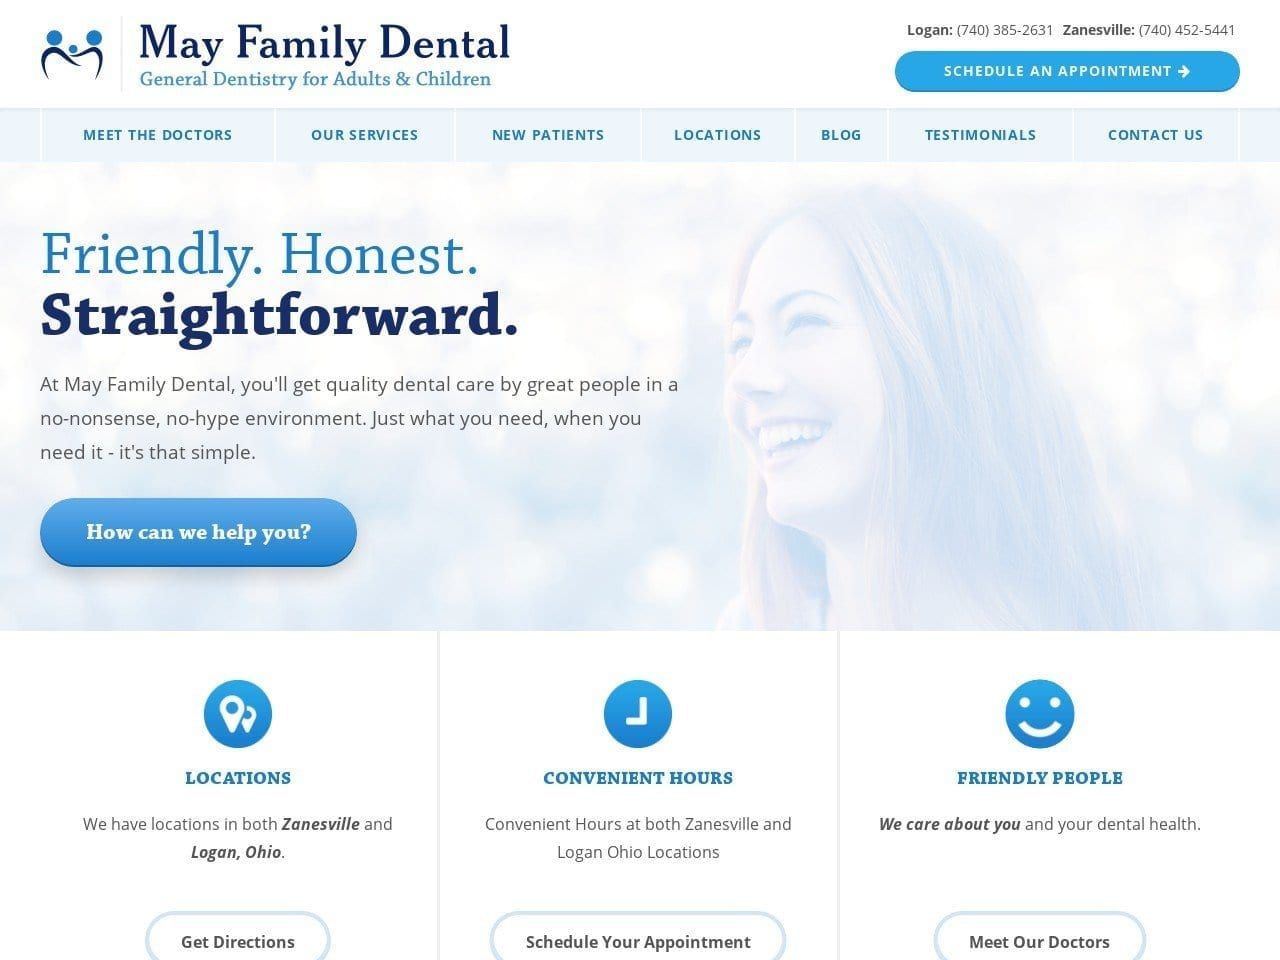 May Family Dental Website Screenshot from mayfamilydental.com